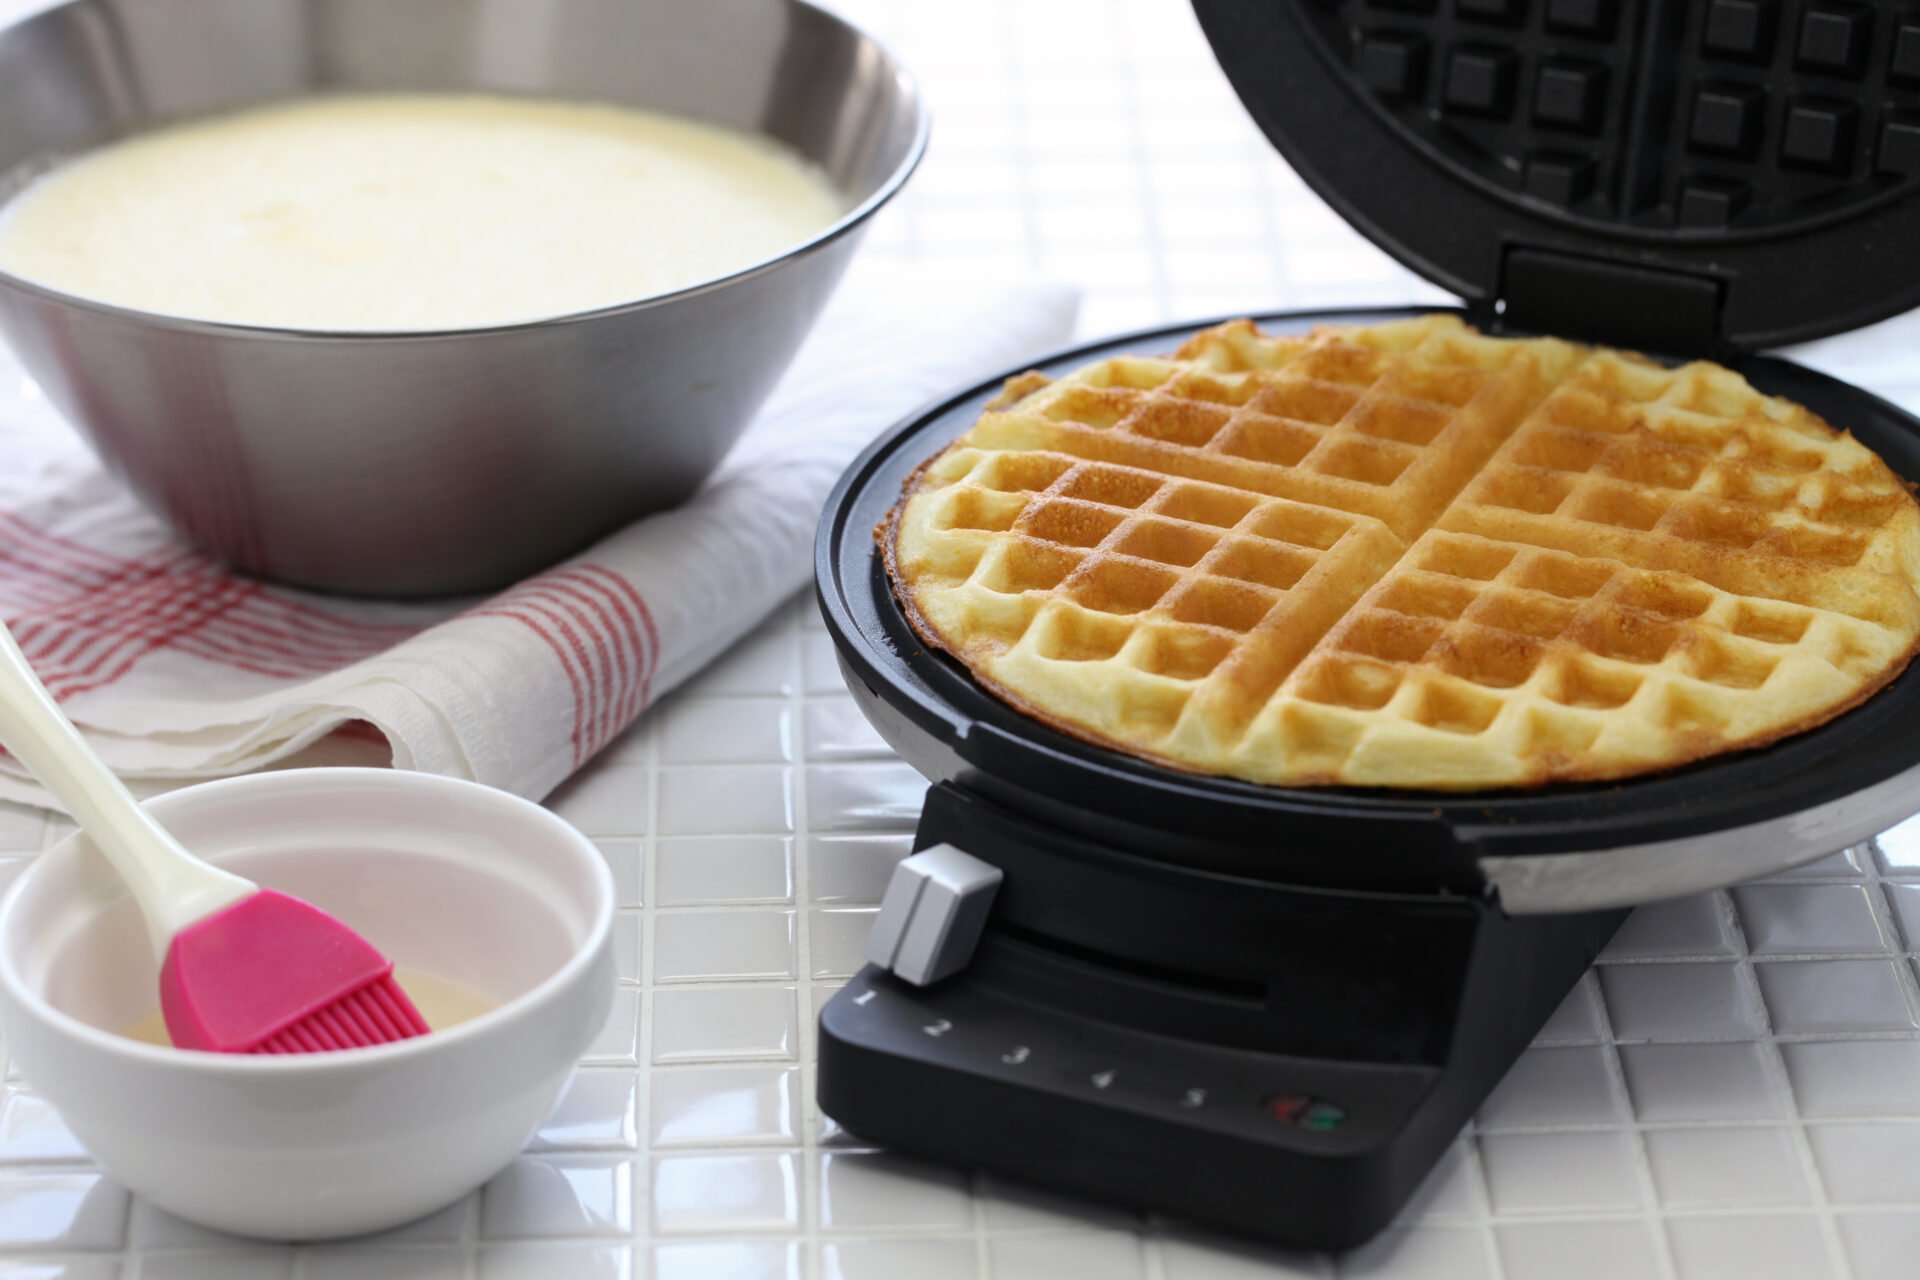 nano ceramic waffle iron with waffles inside